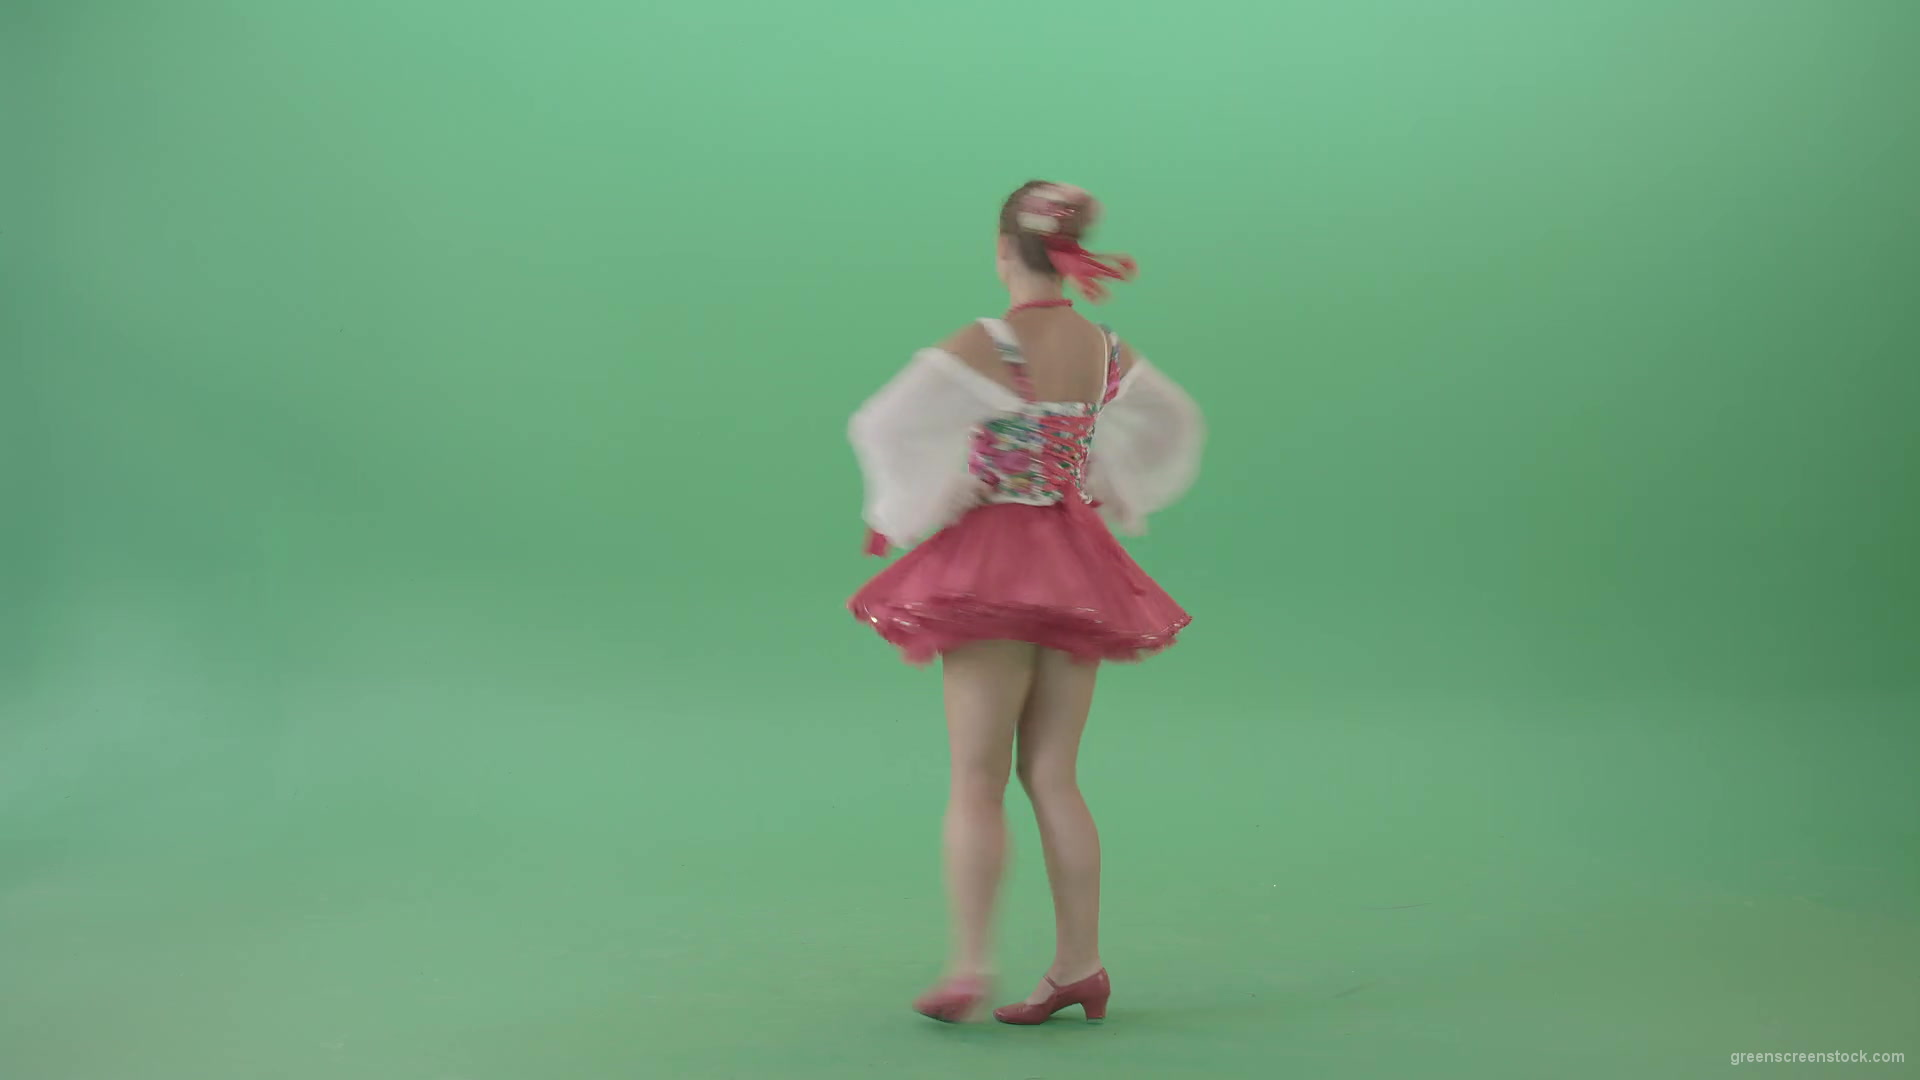 Ukrainian-Girl-spinning-in-dance-in-national-Ukraine-costume-isolated-on-Green-Screen-1920_005 Green Screen Stock